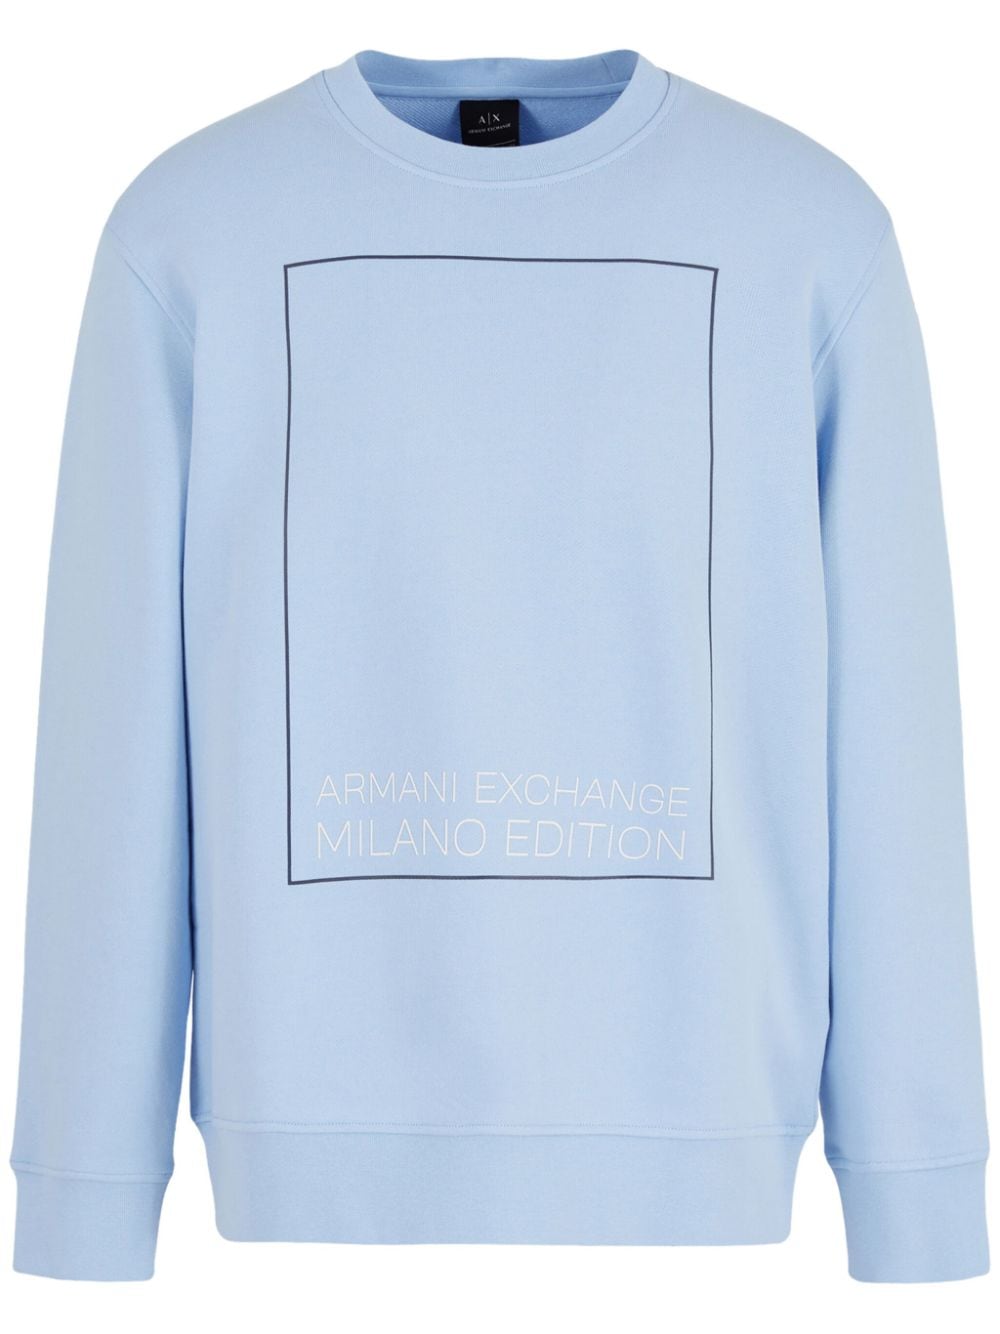 Armani Exchange Sweatshirt mit Milano Edition-Print - Blau von Armani Exchange